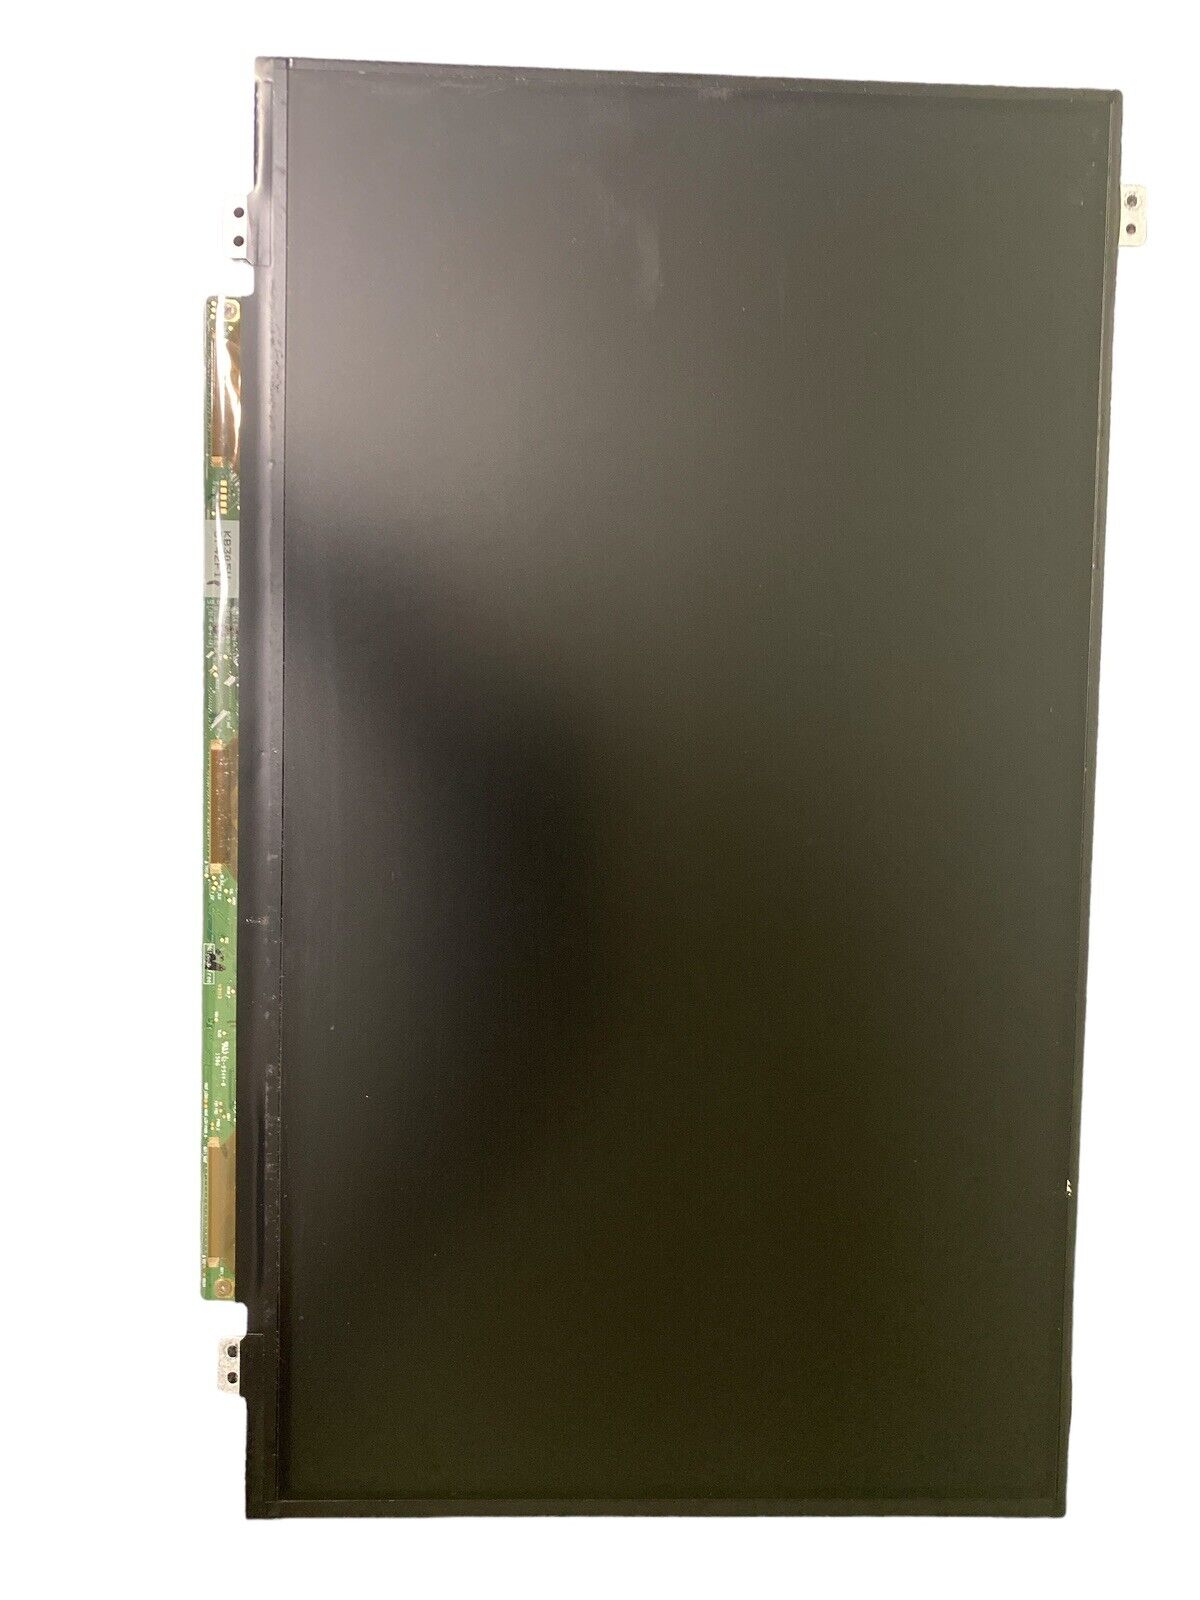 LG LP140WH8 (TP)(D1) 1366 x 768 14 in Matte Laptop Screen SD10F54201 04X5902